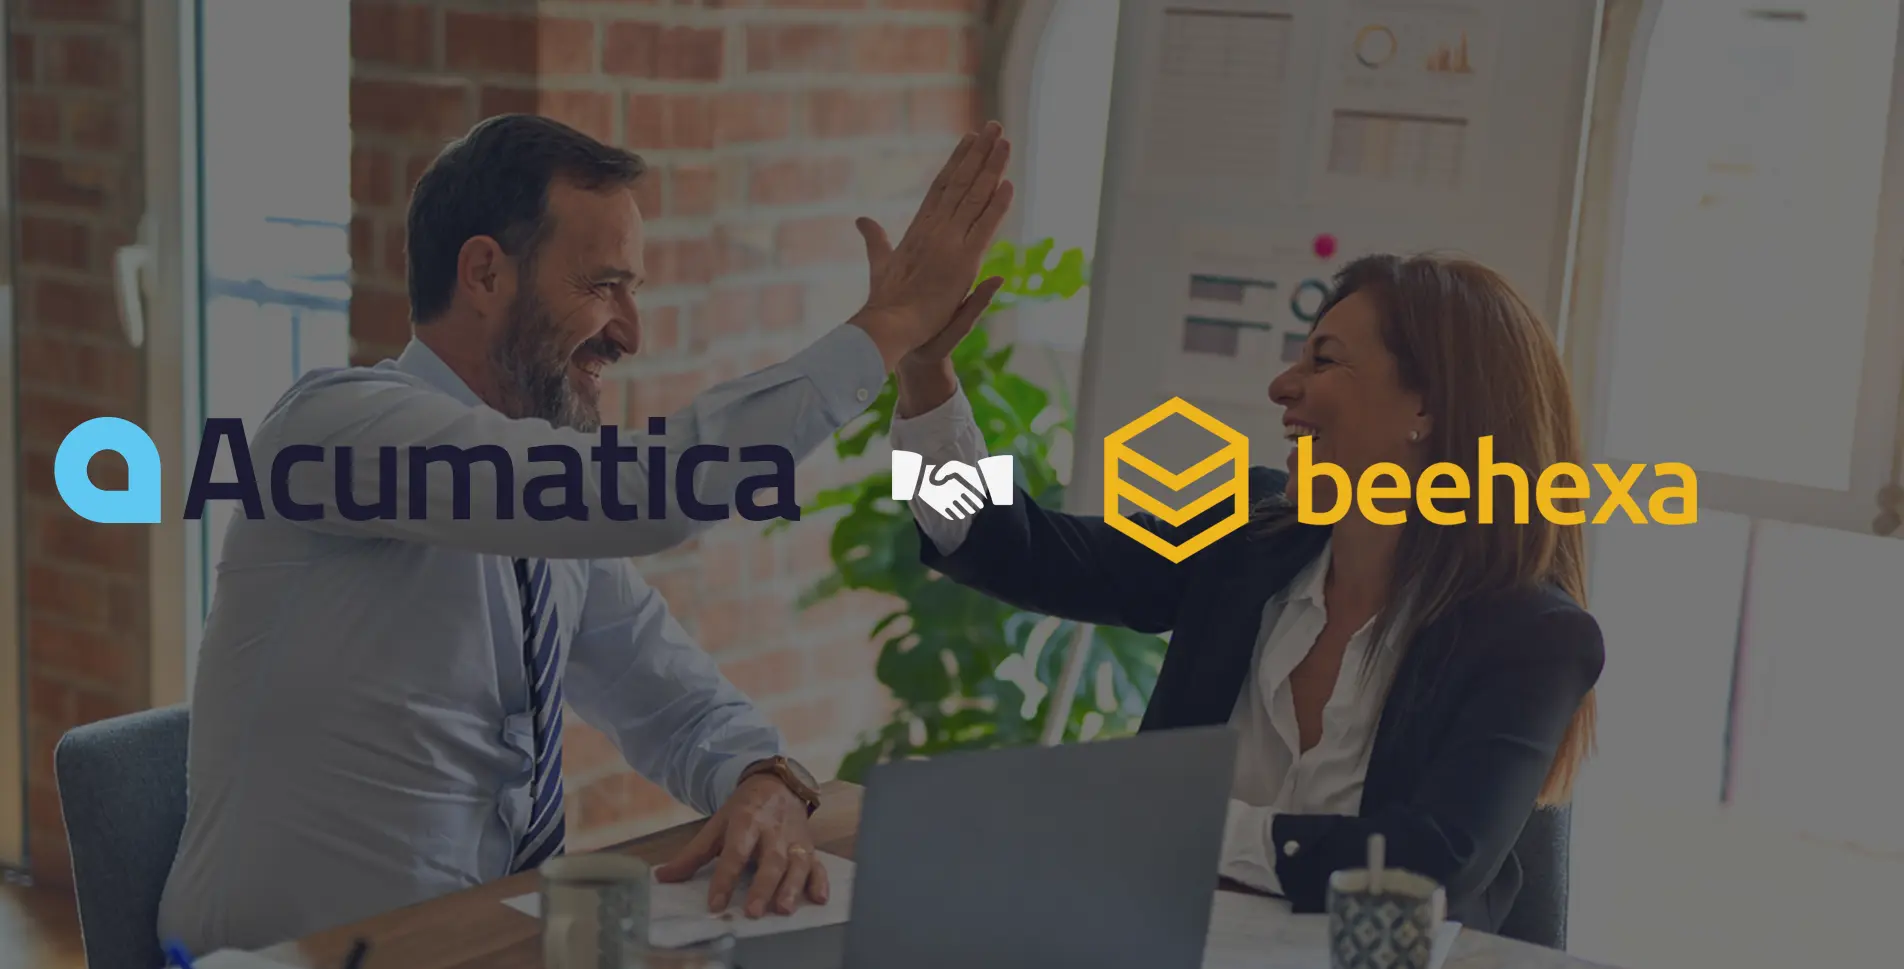 acumatica and beehexa partnership announcement 